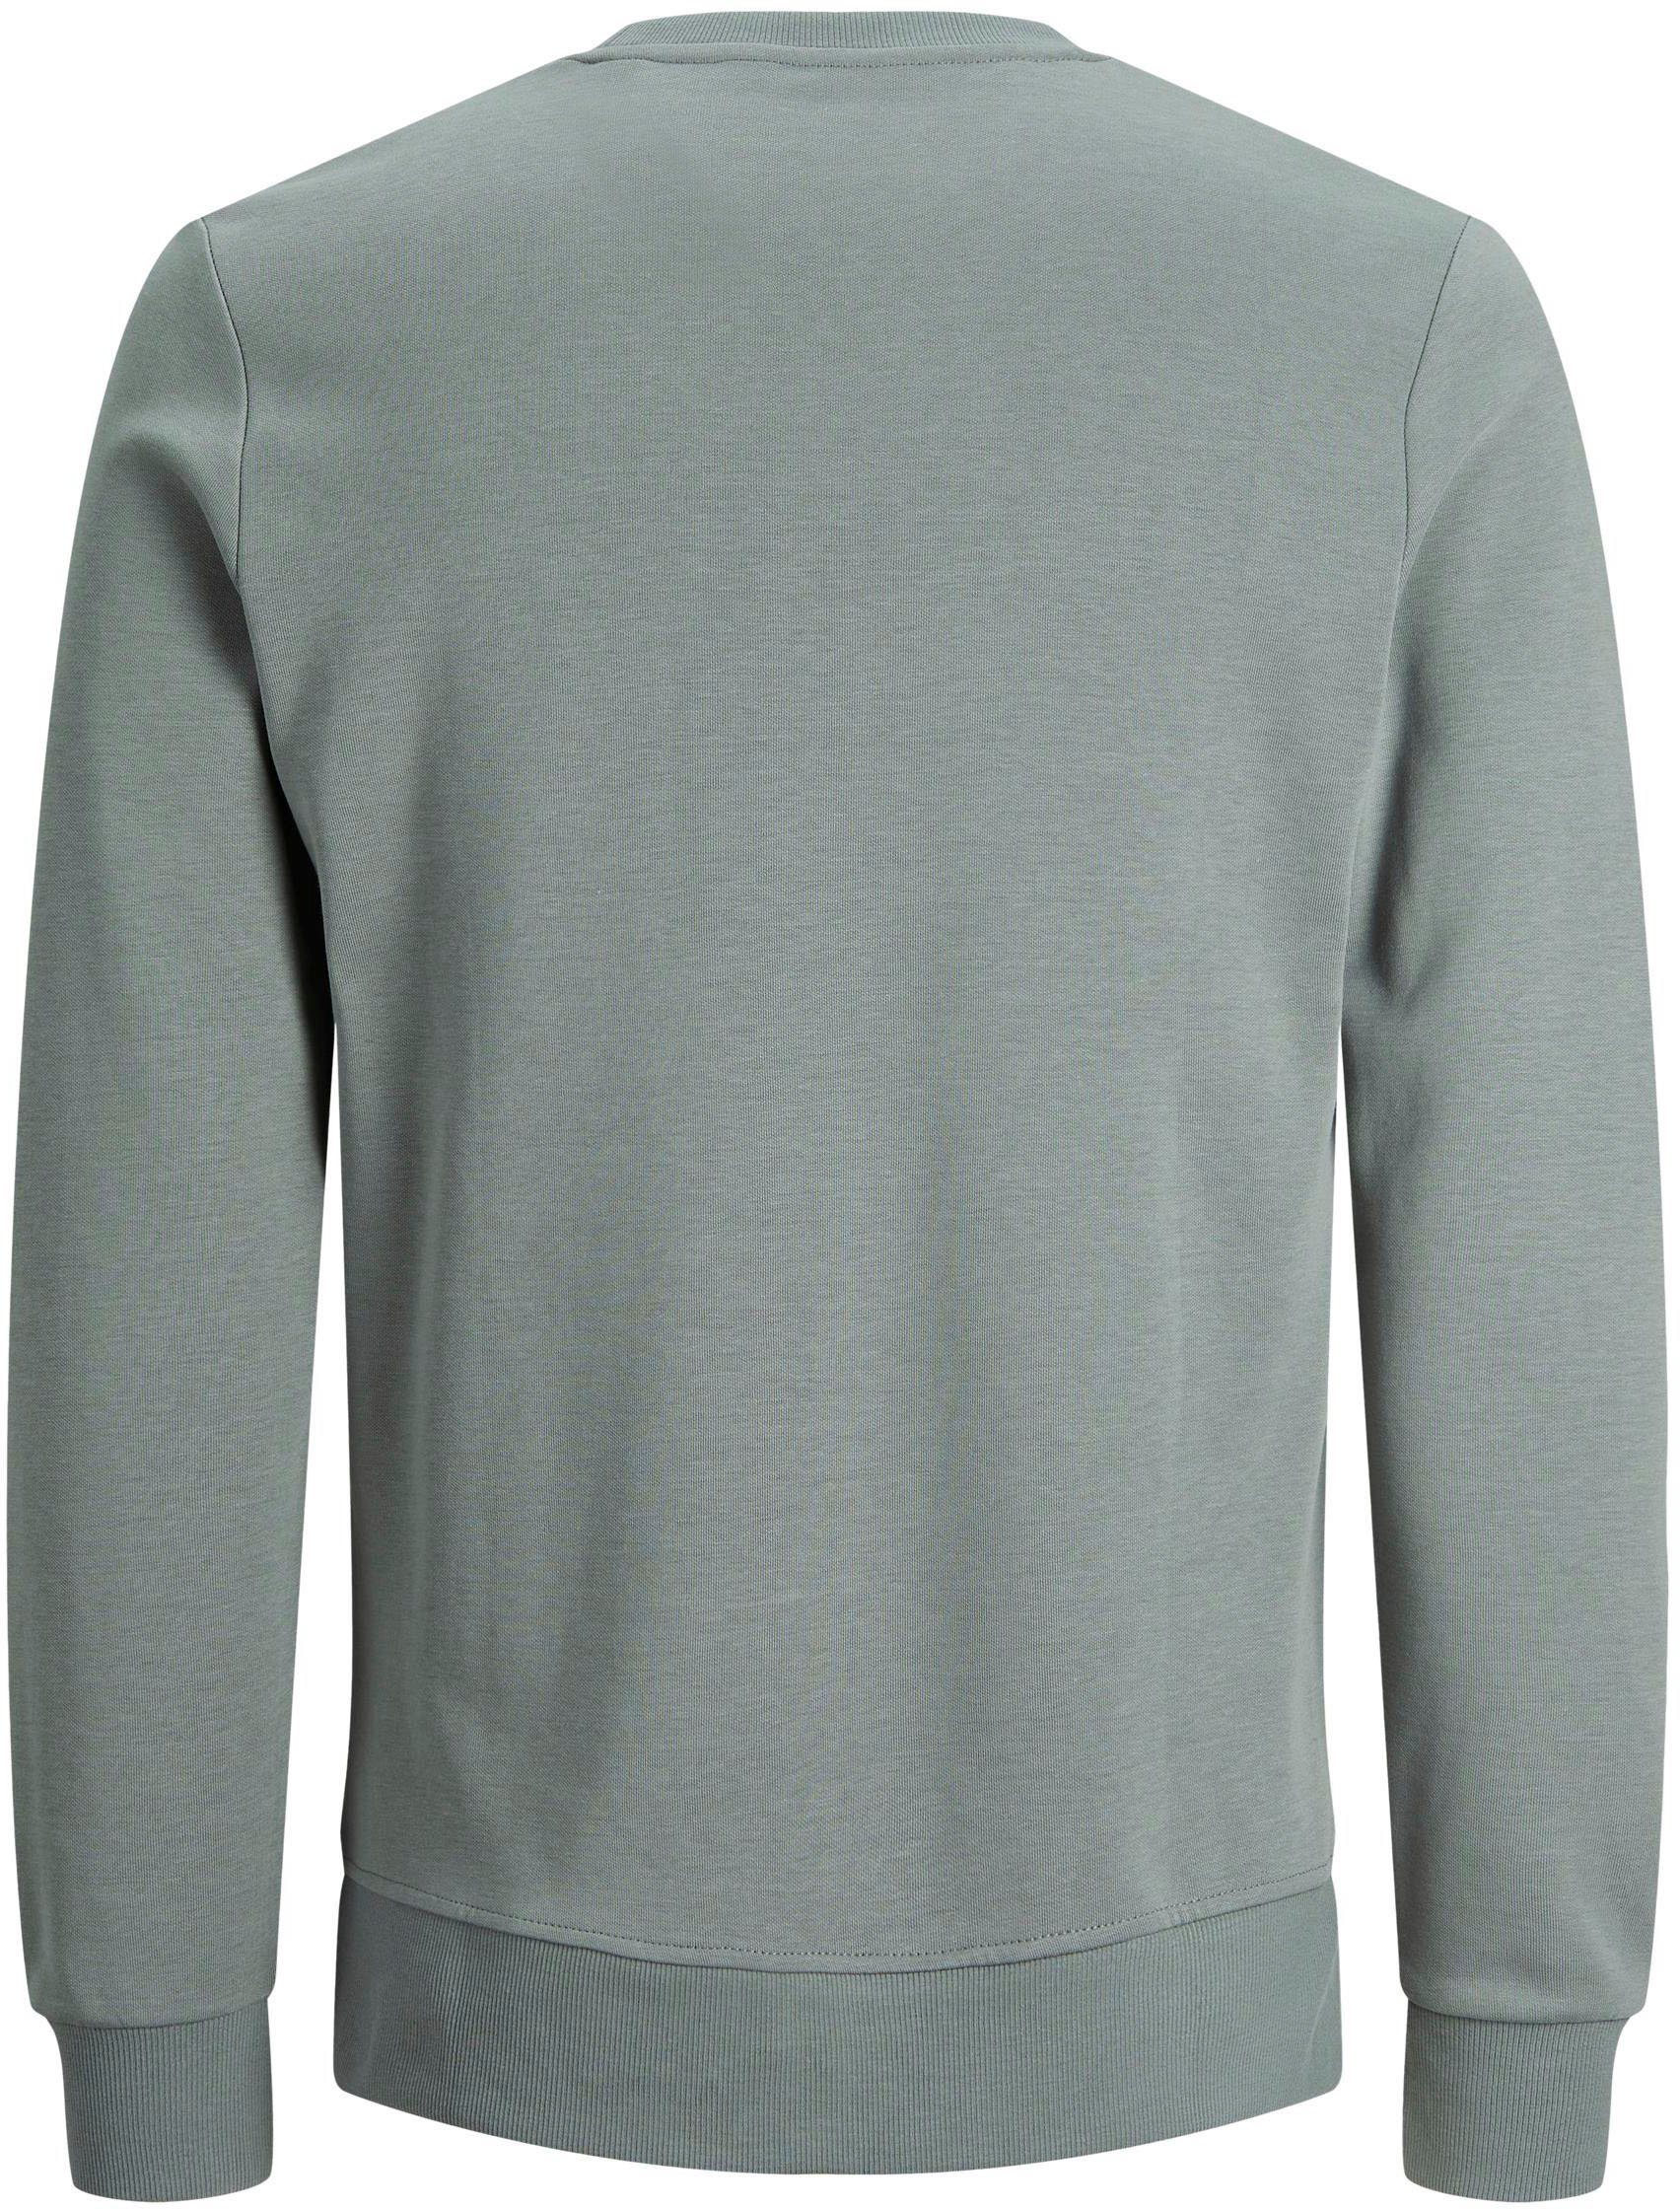 Jack & Jones Sweatshirt BASIC SWEAT graugrün